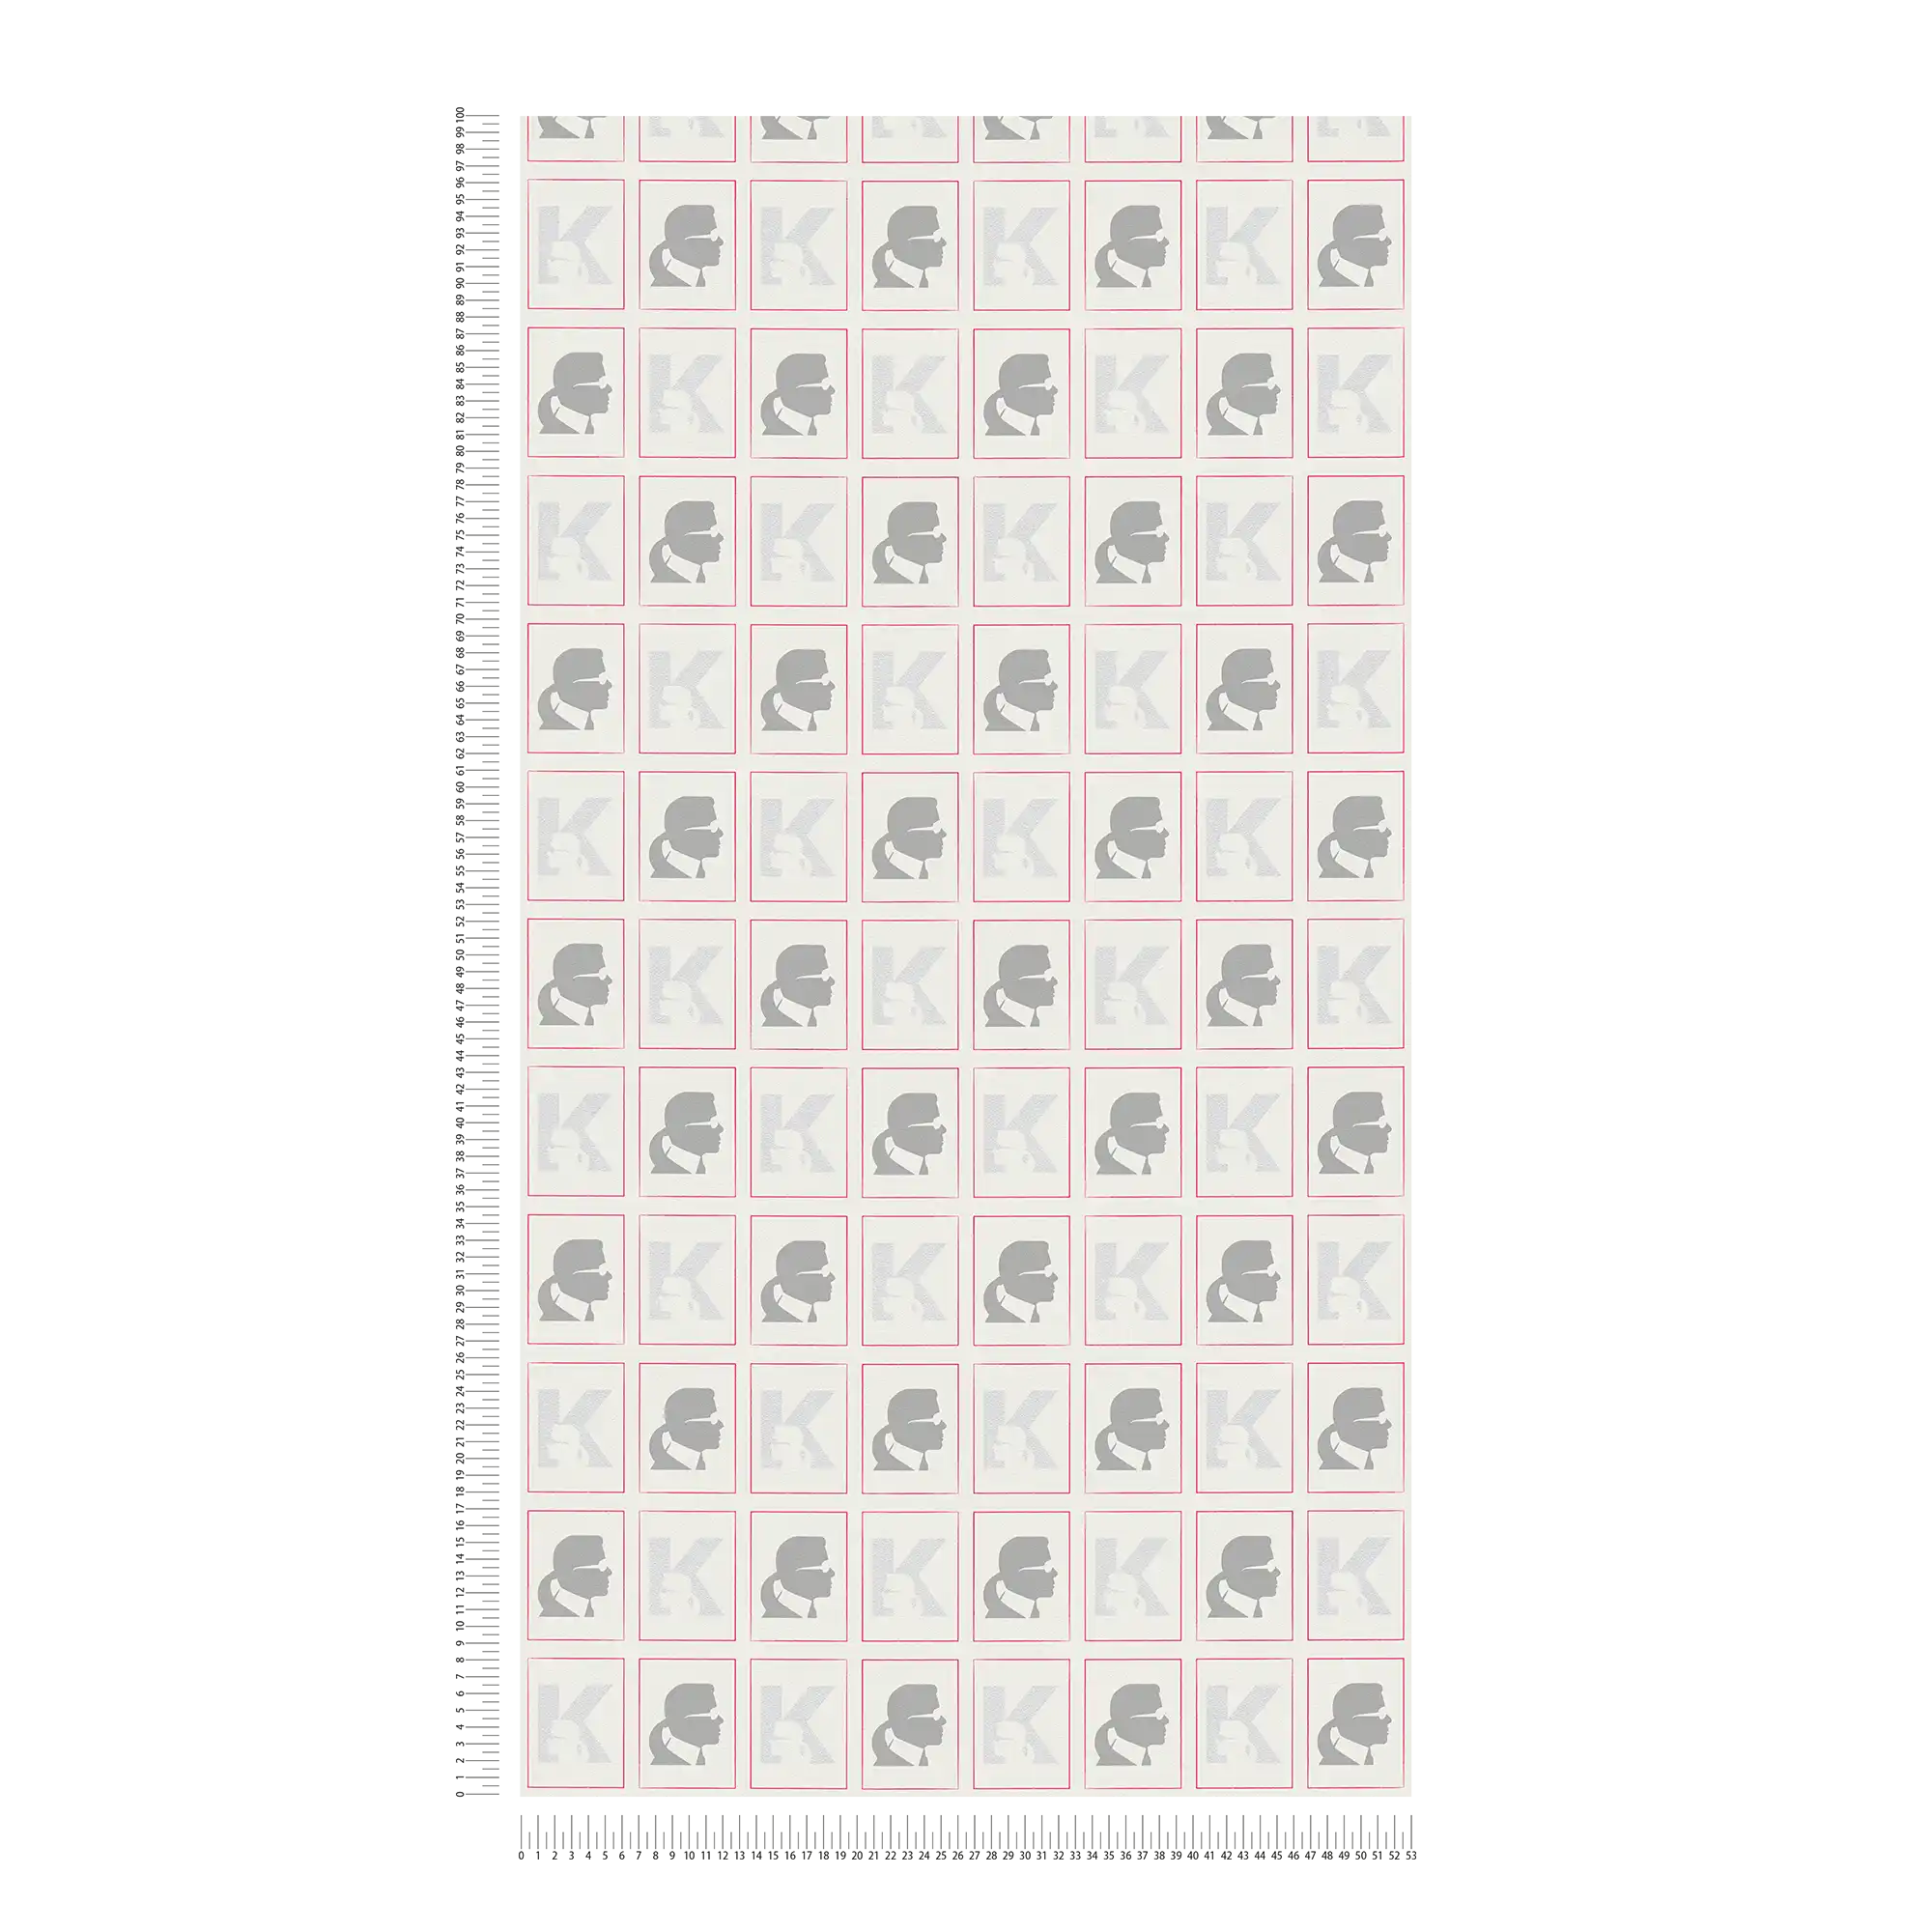             Vliestapete Karl LAGERFELD mit Profil-Muster – Grau, Weiß
        